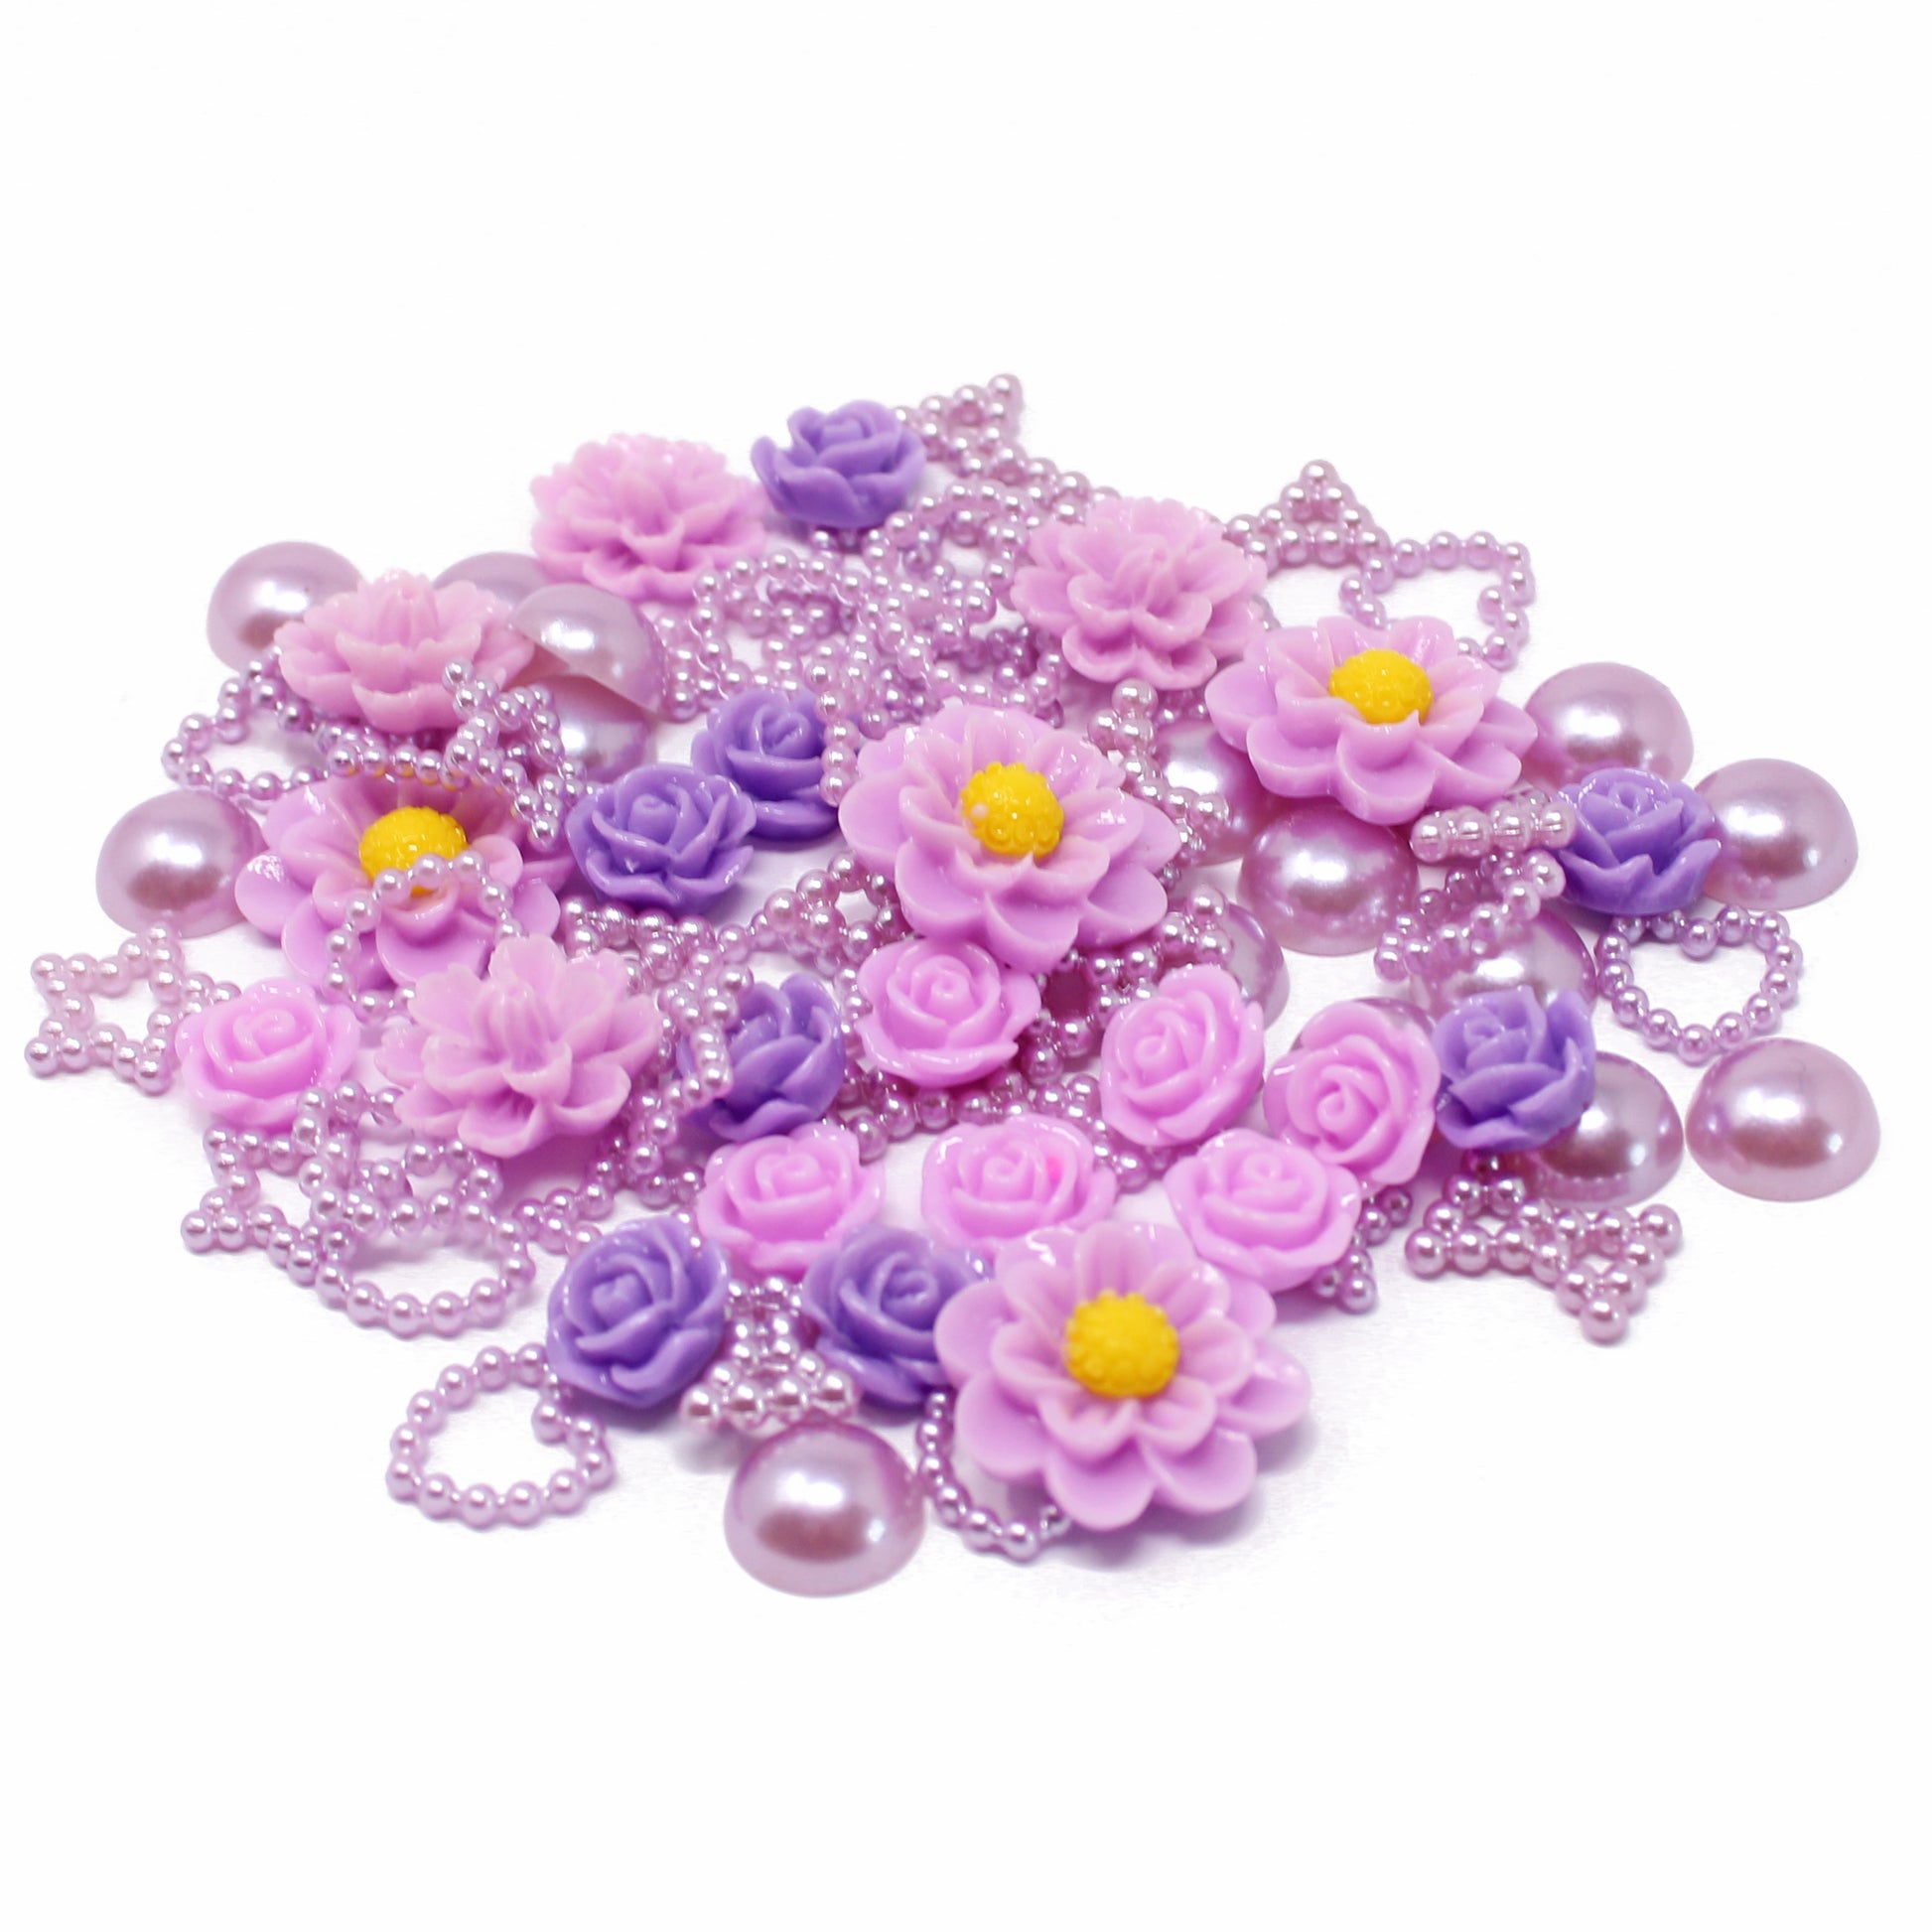 Lilac 80 Mix Resin Craft Embellishment Flatbacks